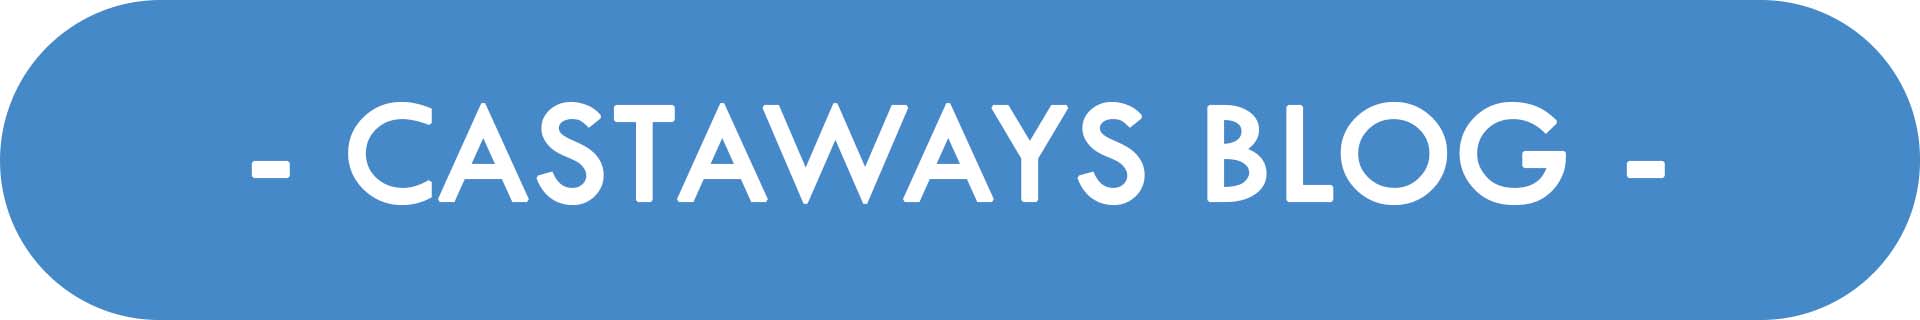 Castaways Blog banner